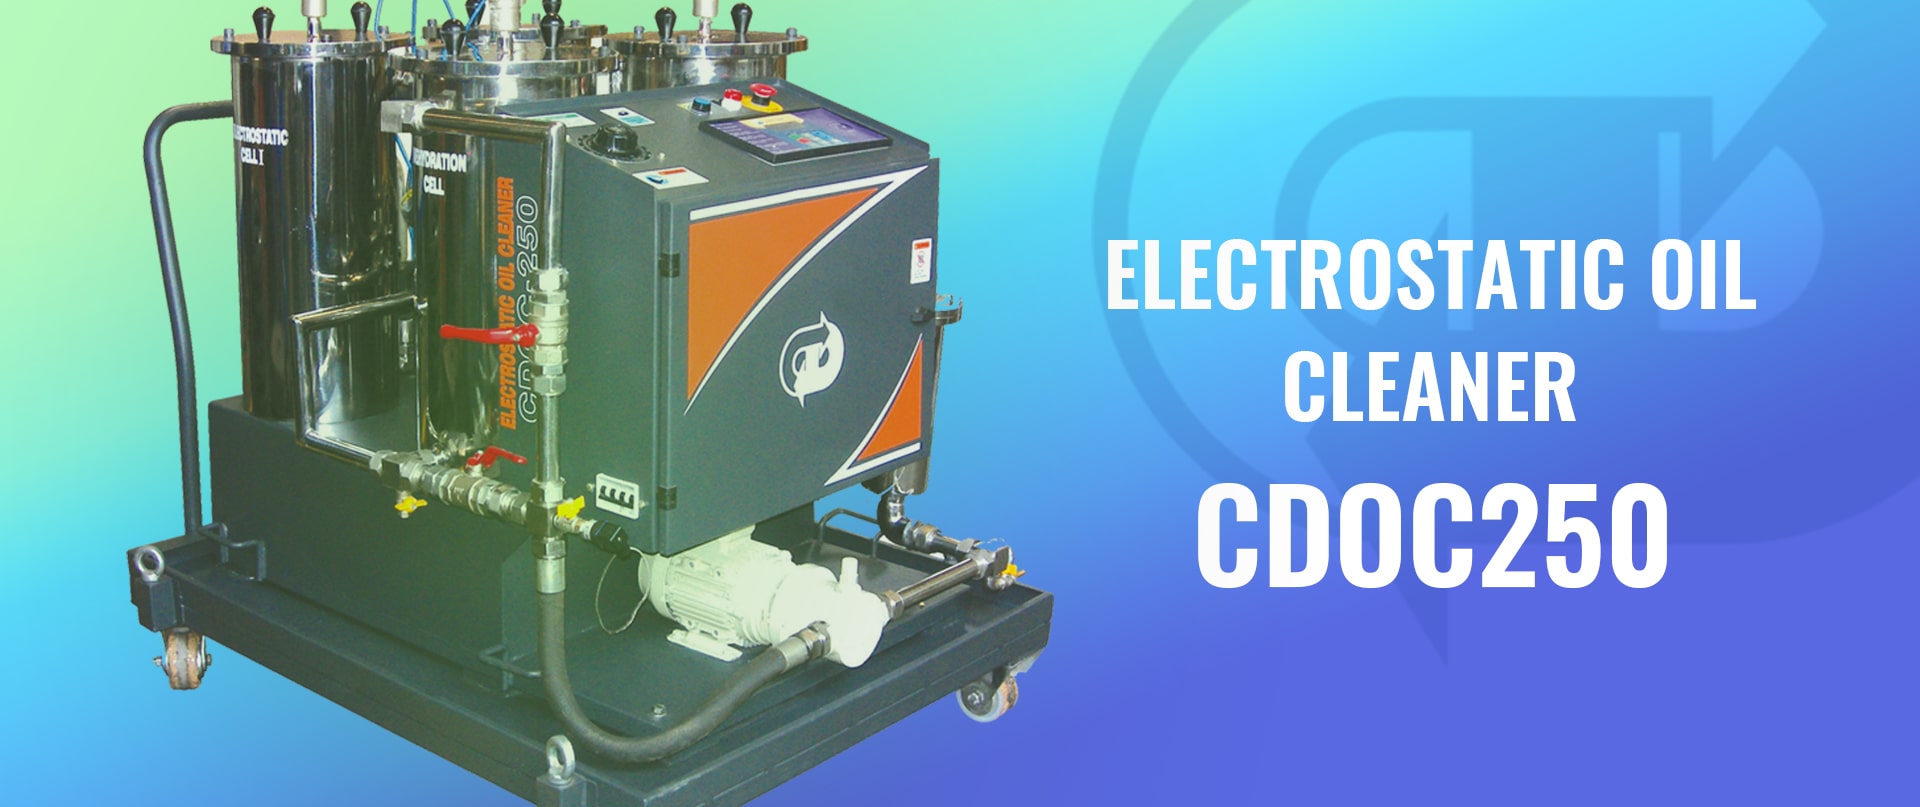 Electrostatic Oil cleaner